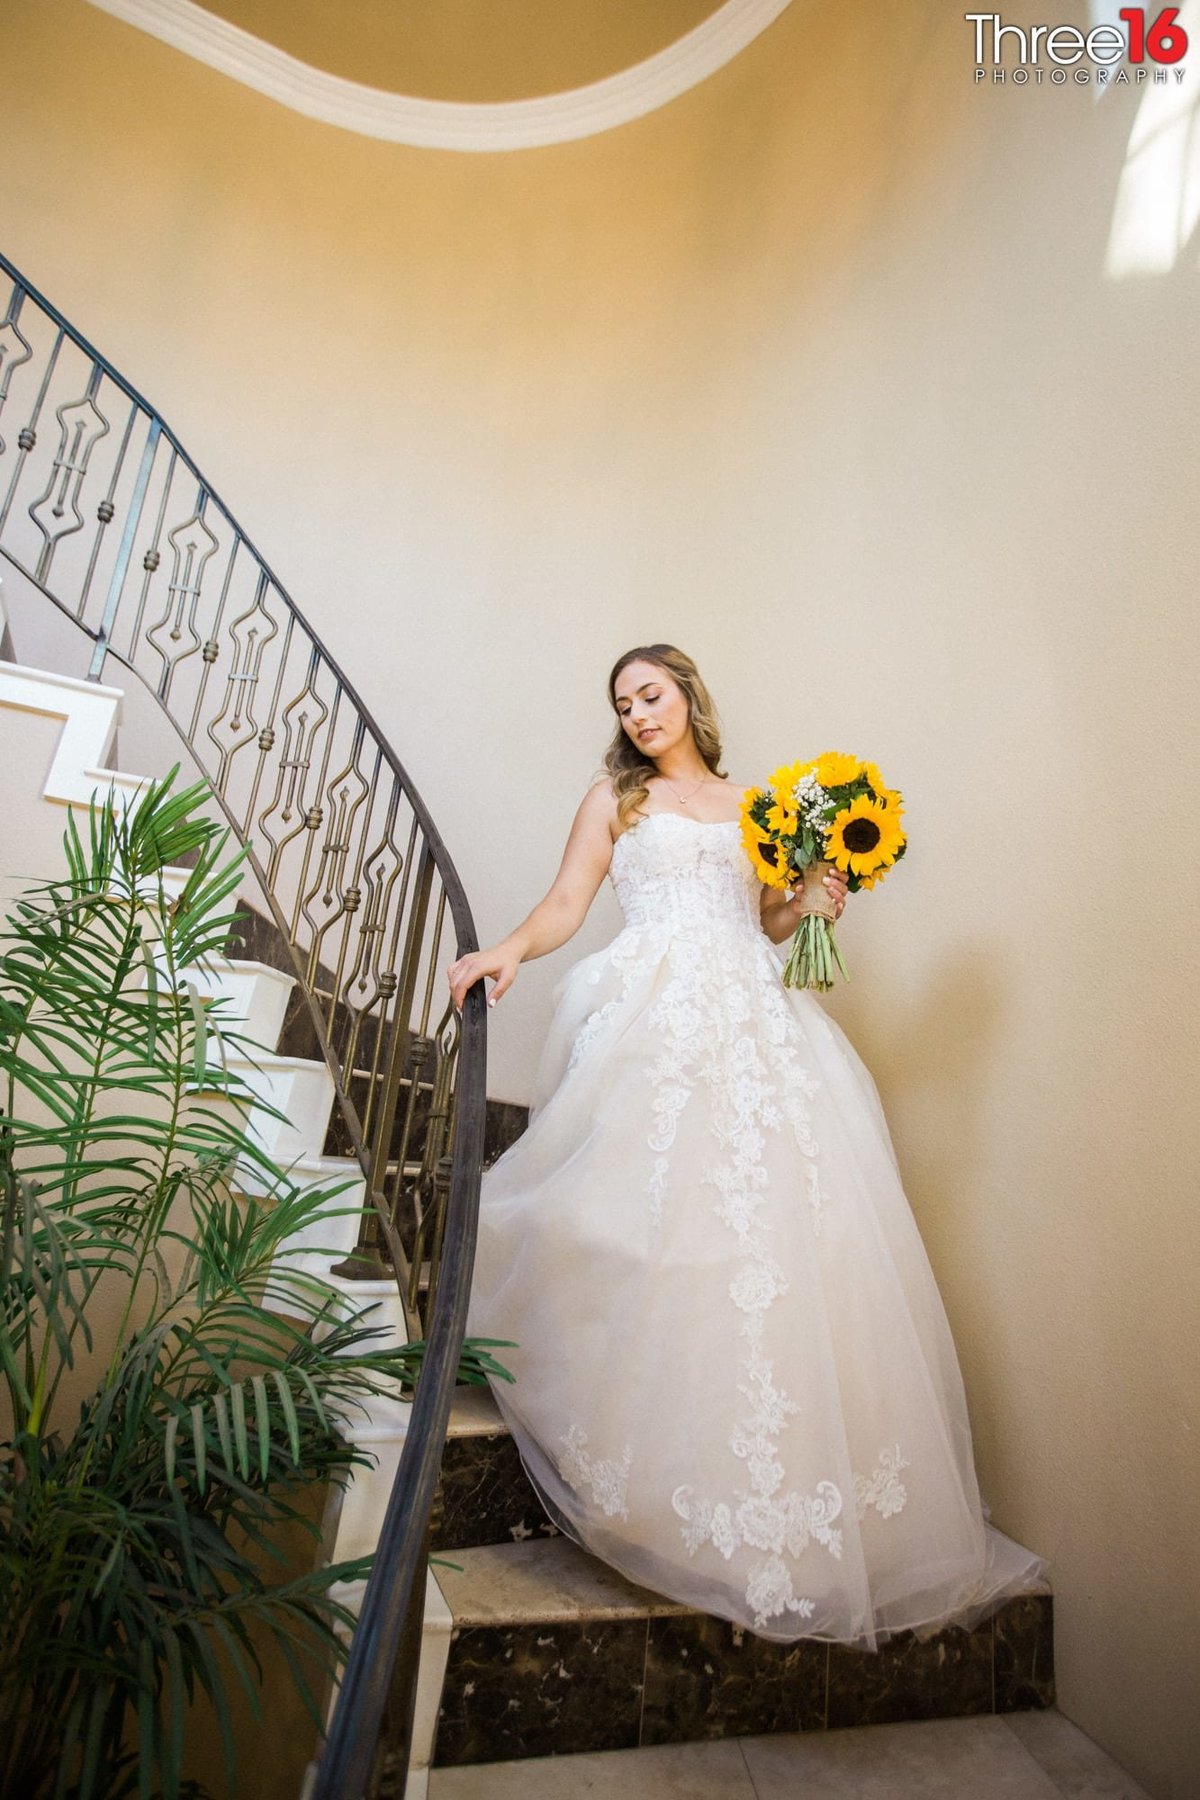 Bride walks down a spiral staircase